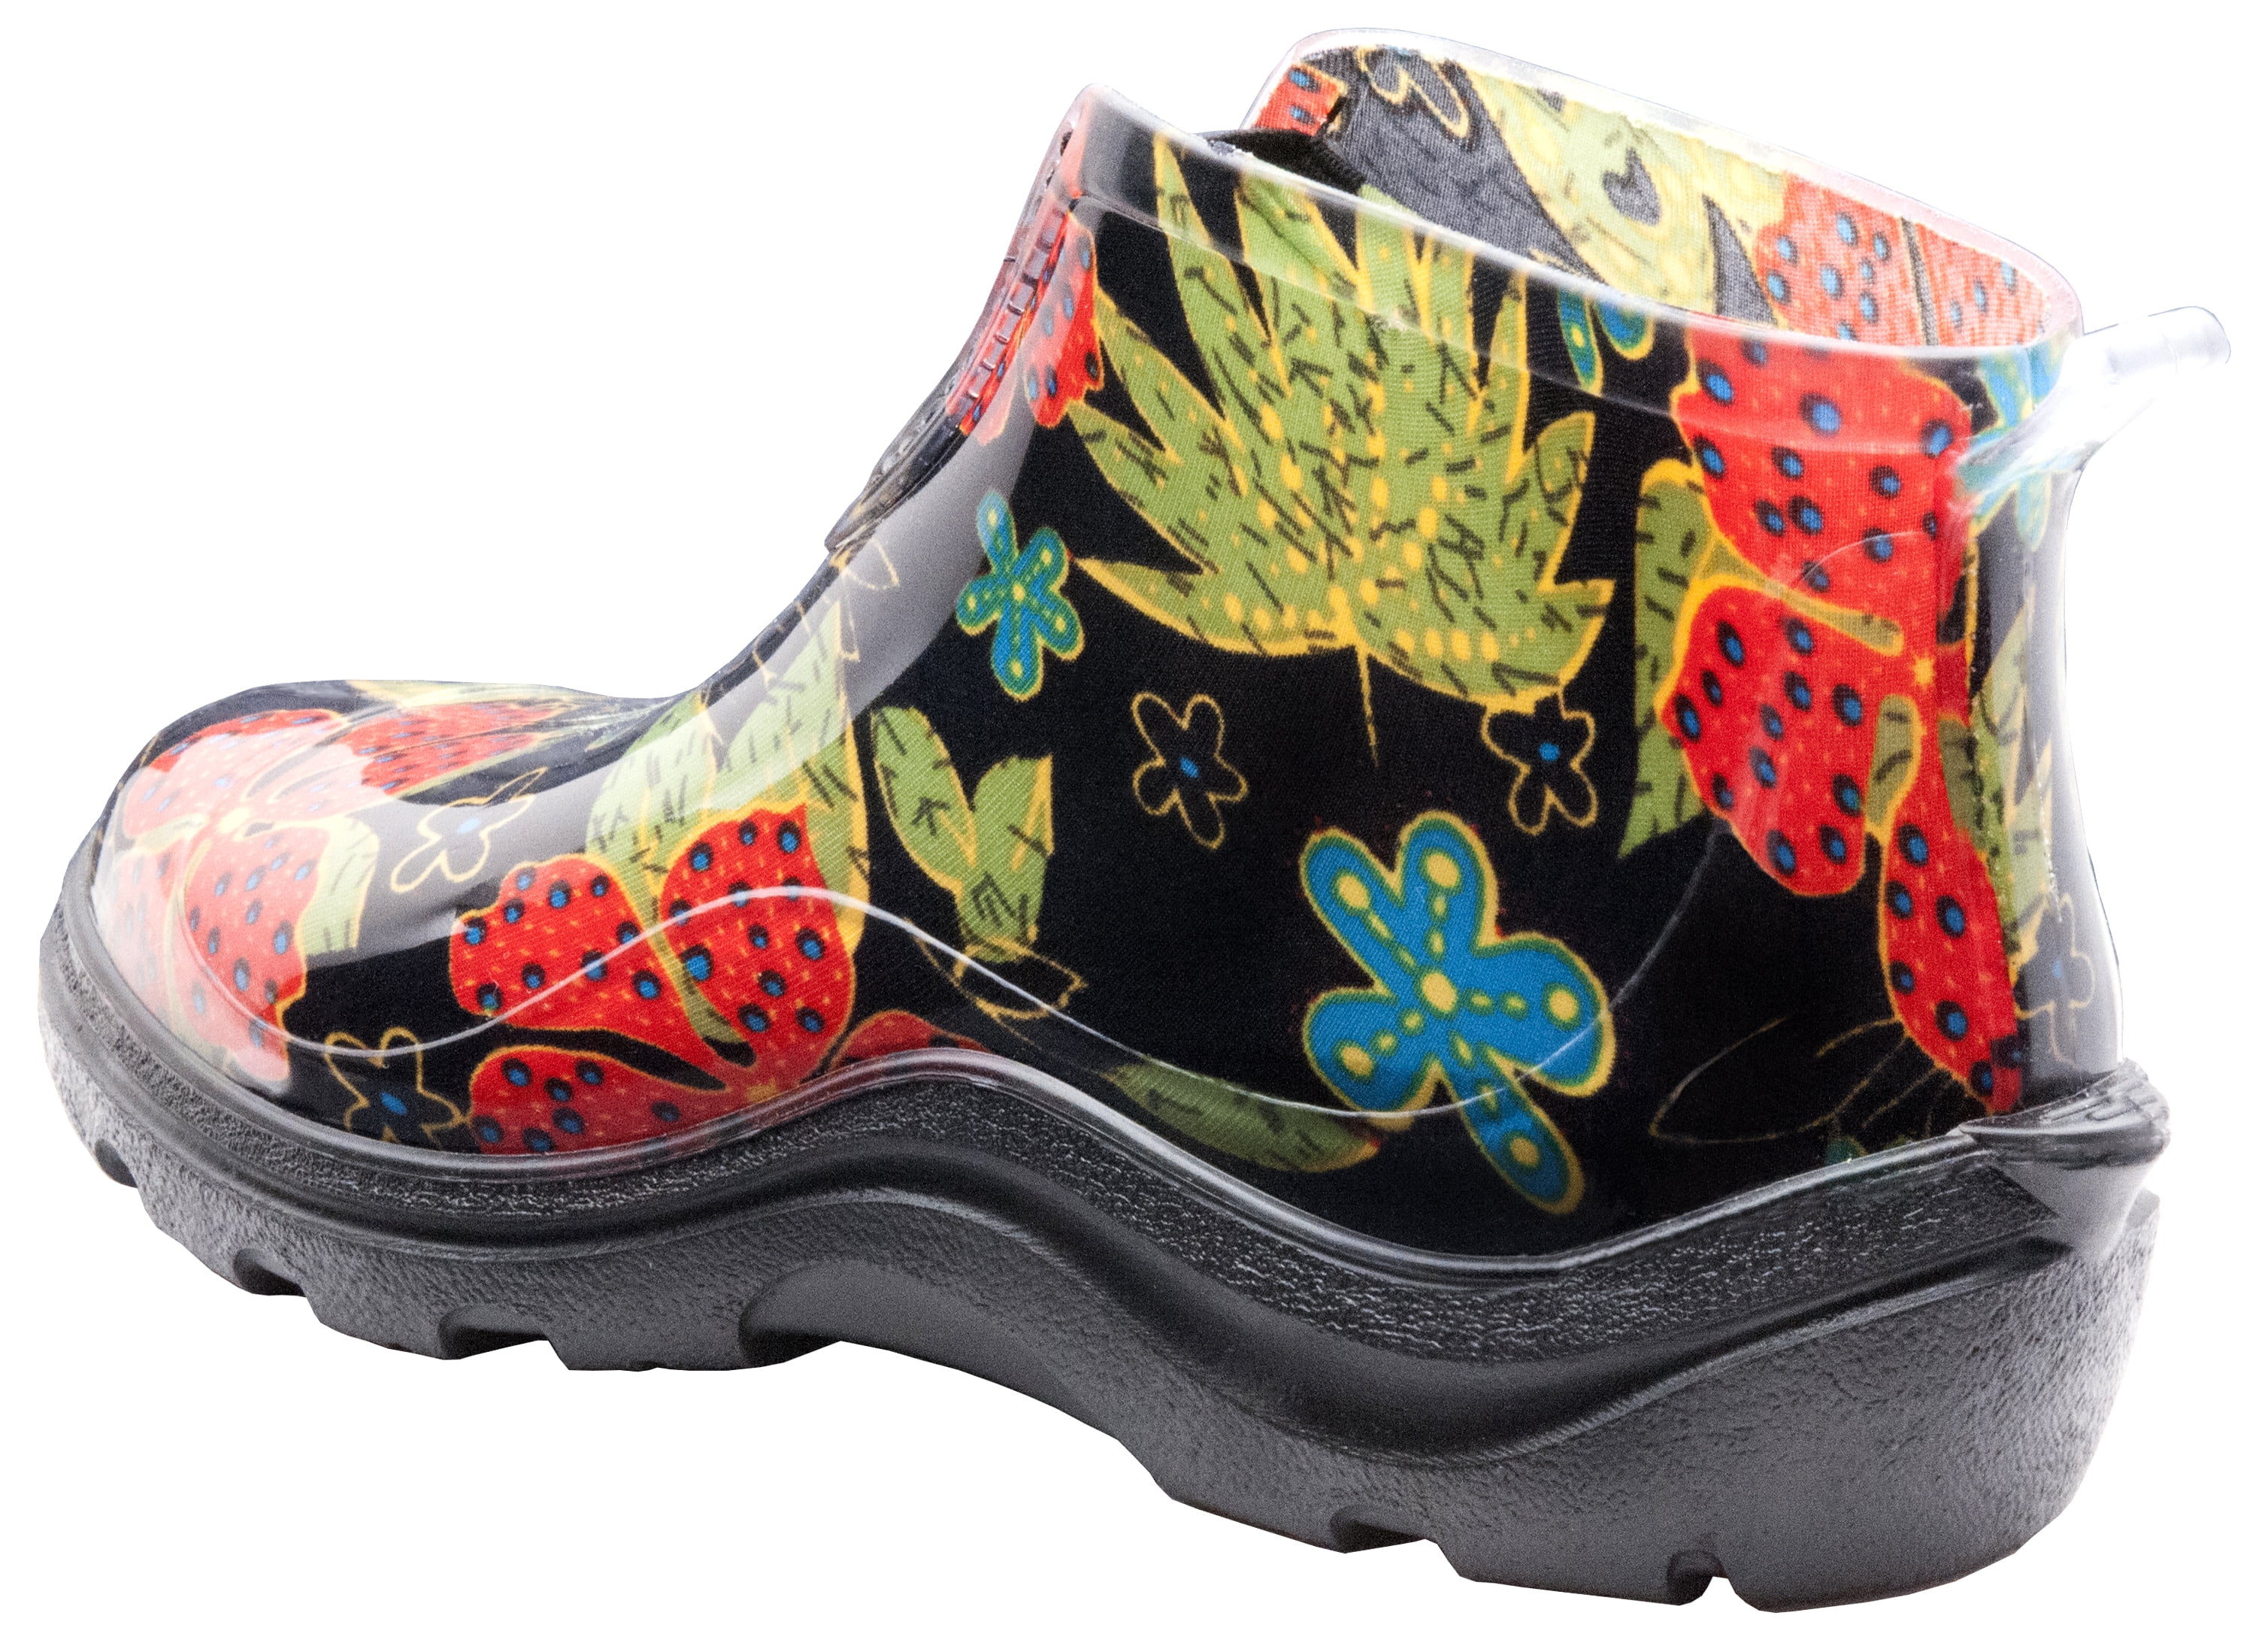 Sloggers 2841BK7 Size 7 Women's Black Rain & Garden Ankle Boots 